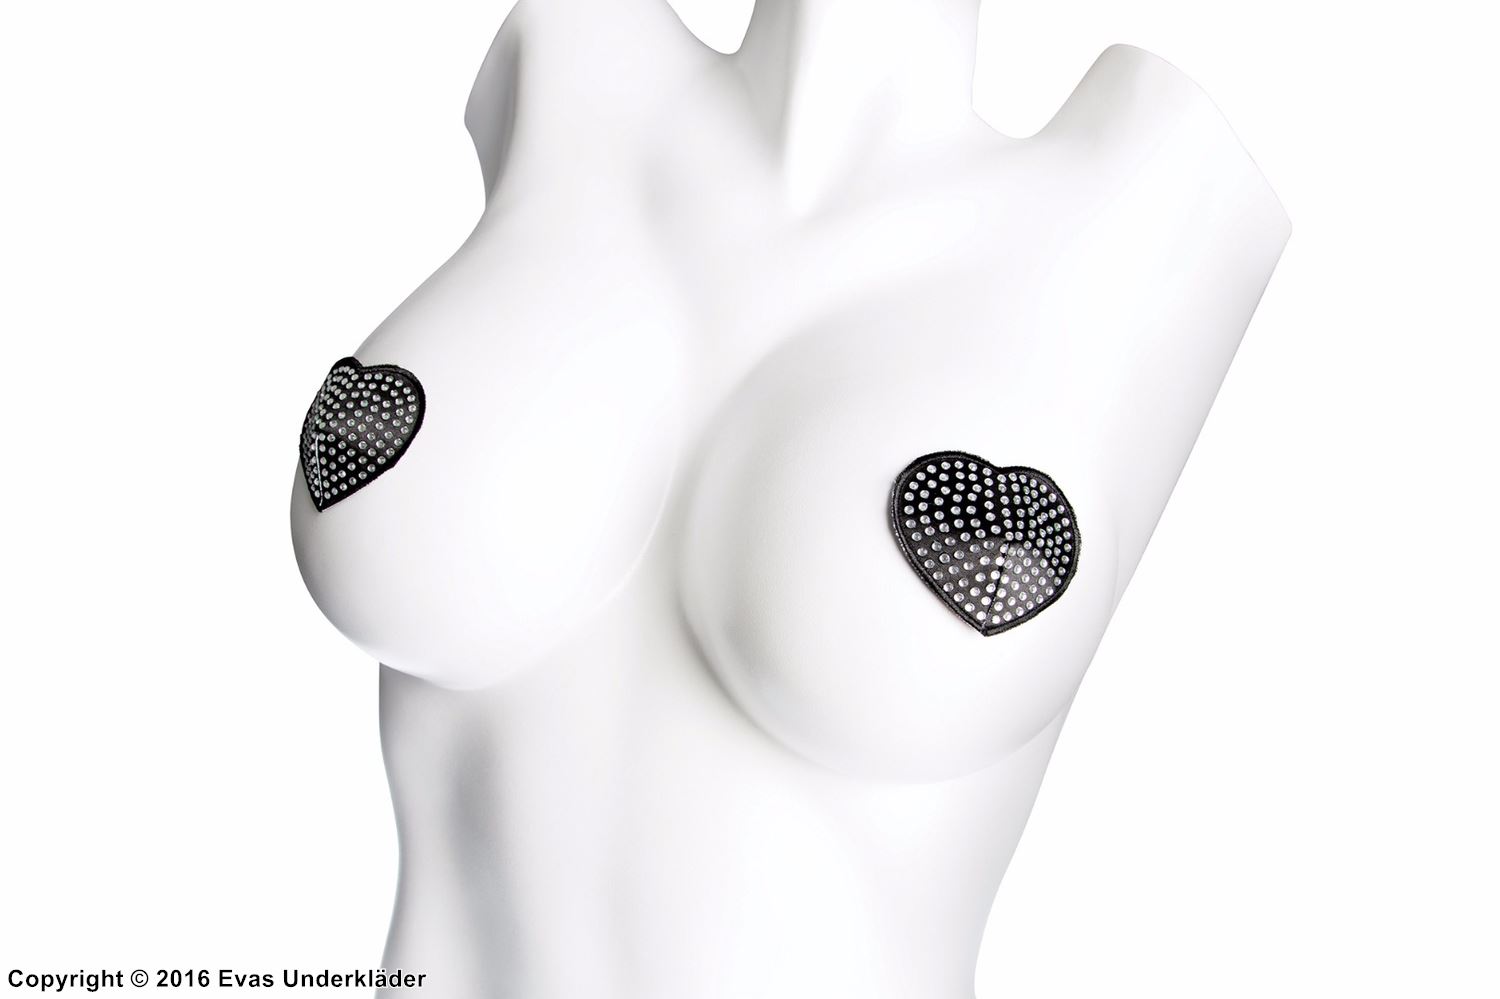 Self-adhesive nipple cover/patch, rhinestones, hearts